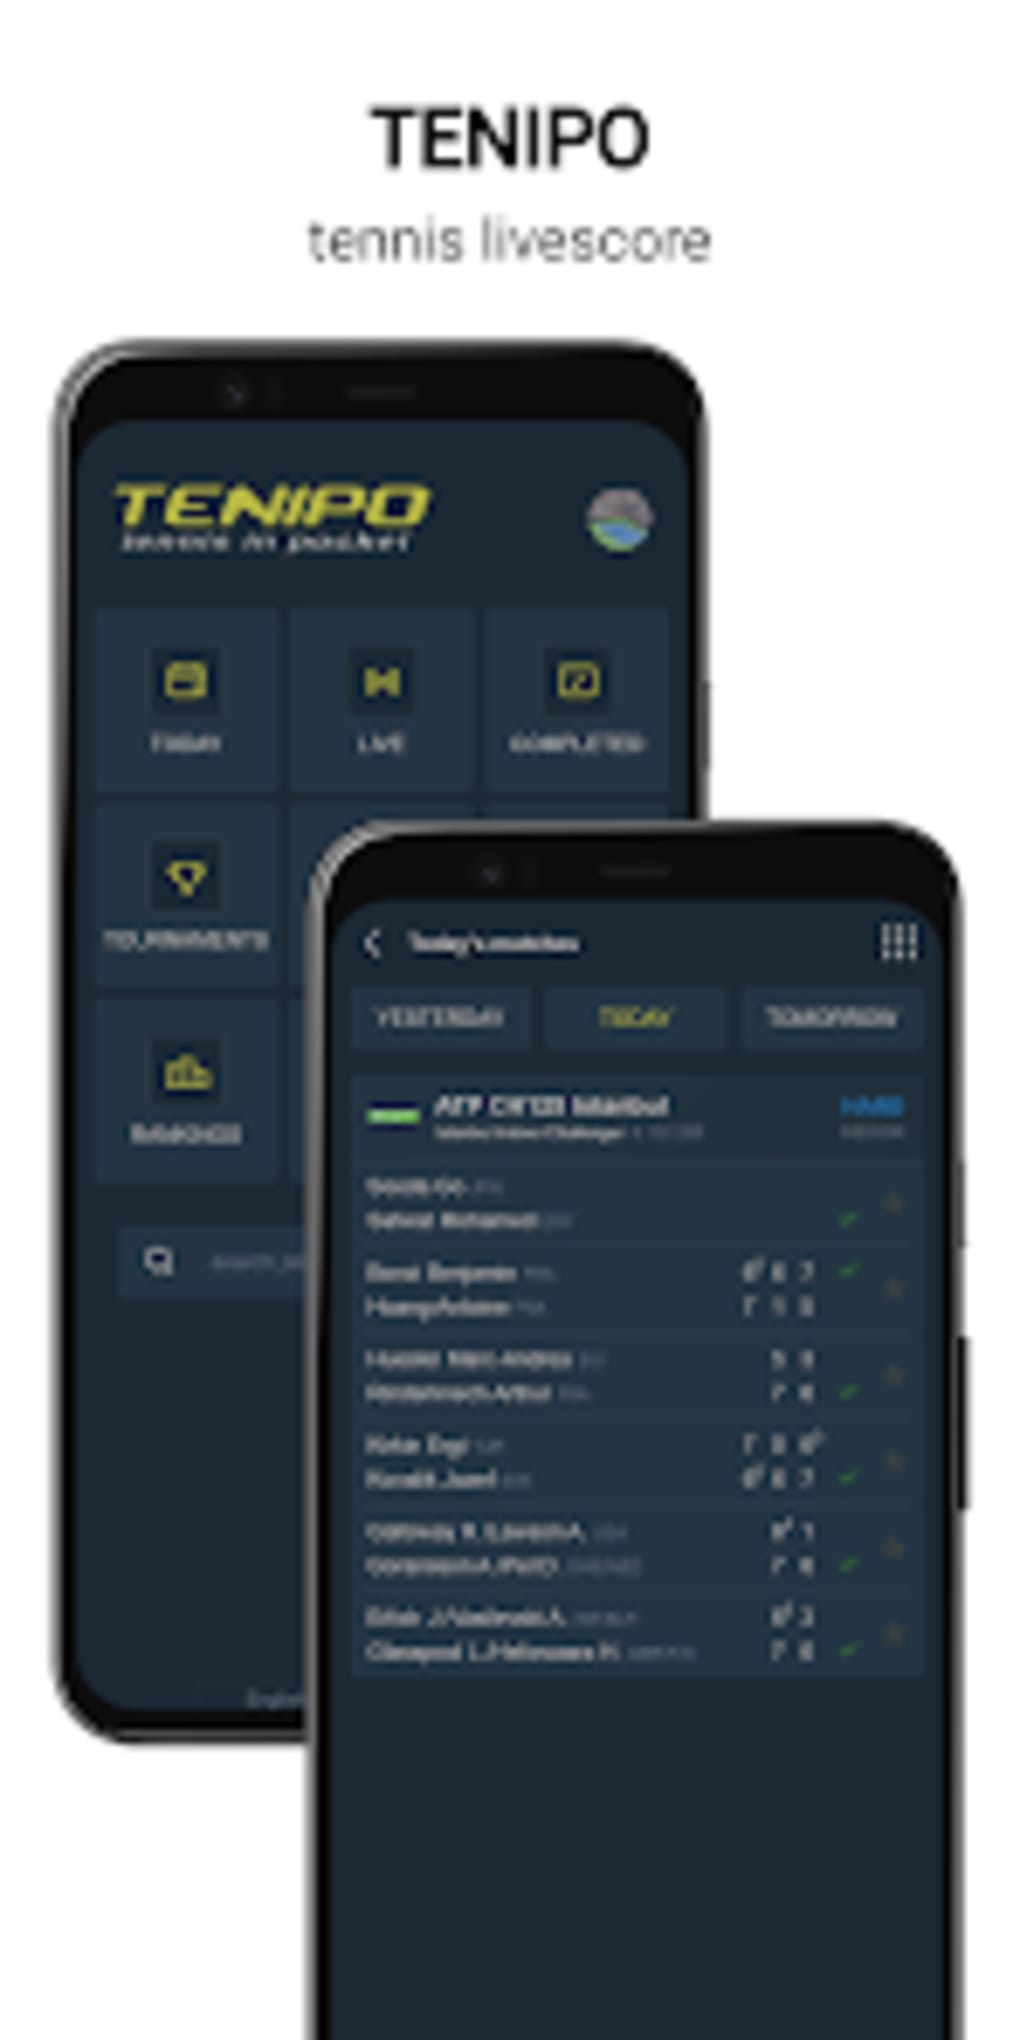 TENIPO - Tennis Livescore untuk Android